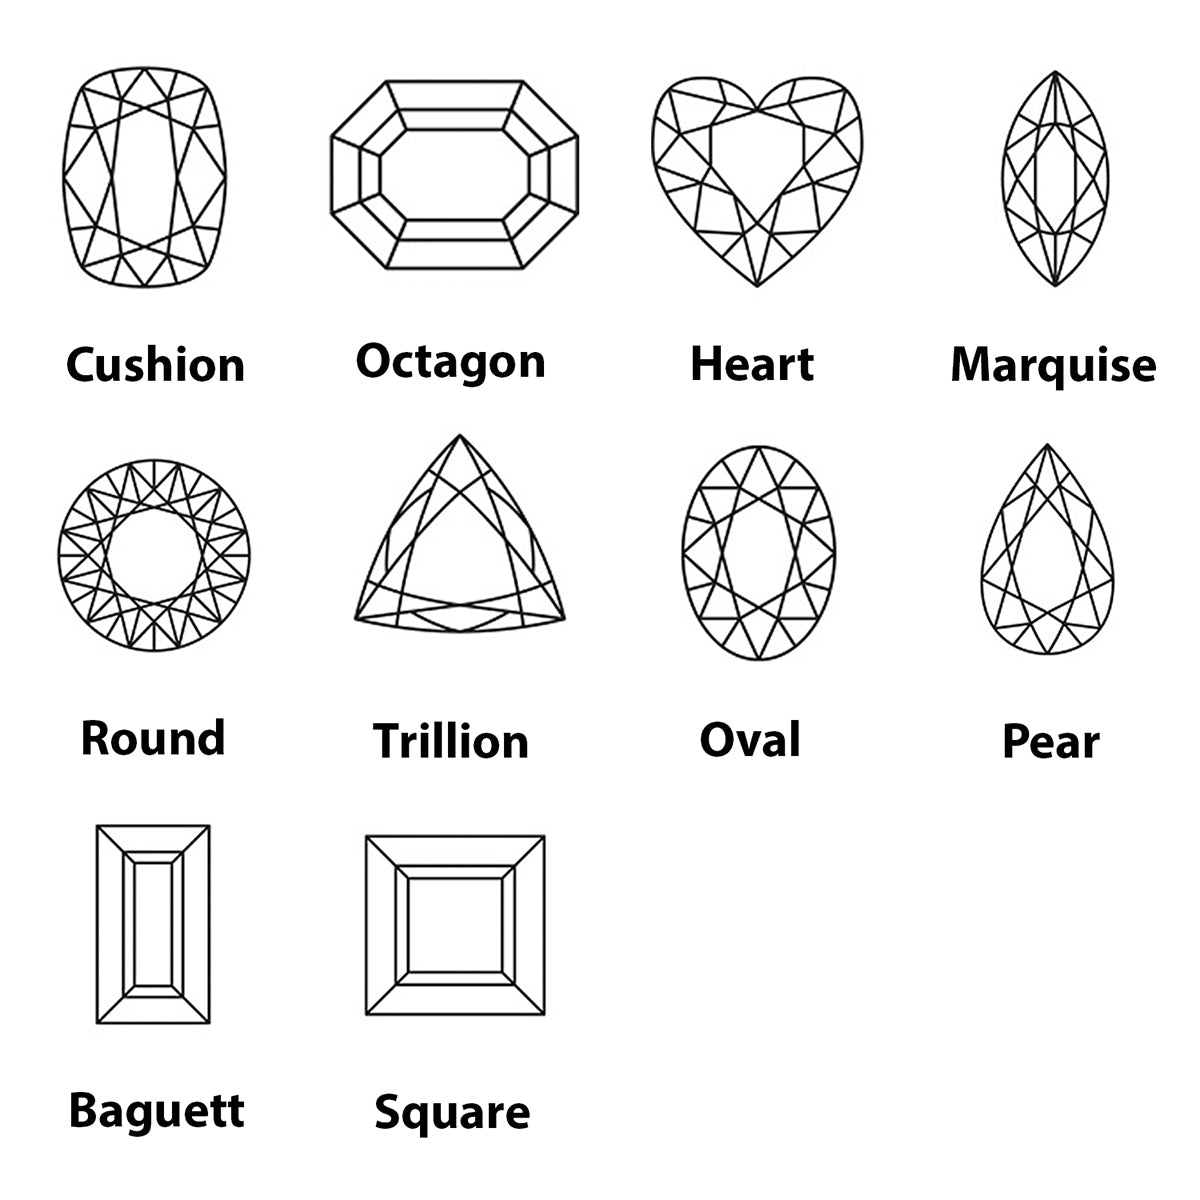 riyogems 1pc レッドジャスパー カボション 11x11 mm 正方形の形状の美しい品質のルース宝石